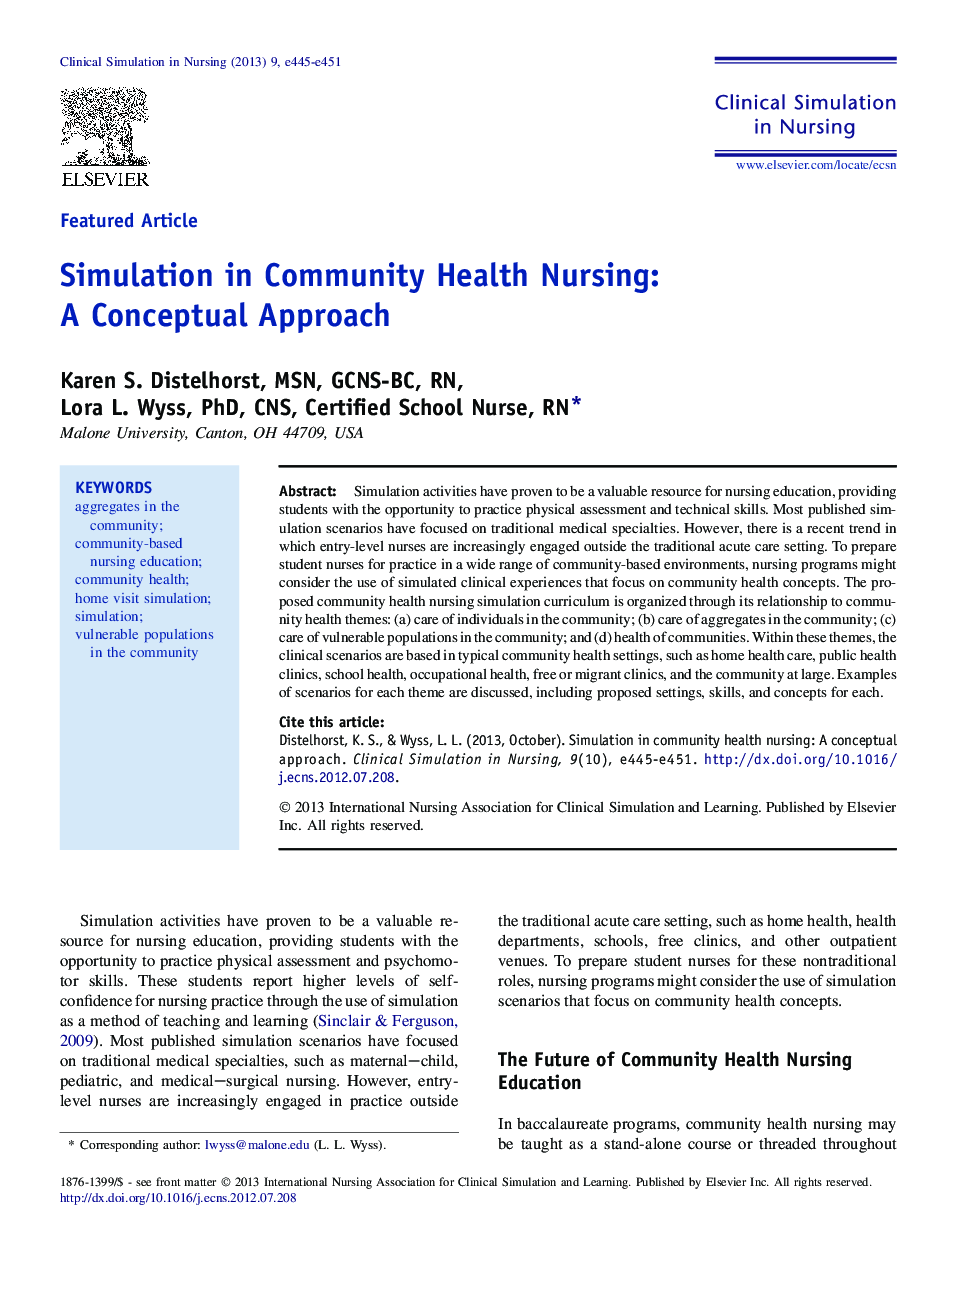 Simulation in Community Health Nursing: A Conceptual Approach